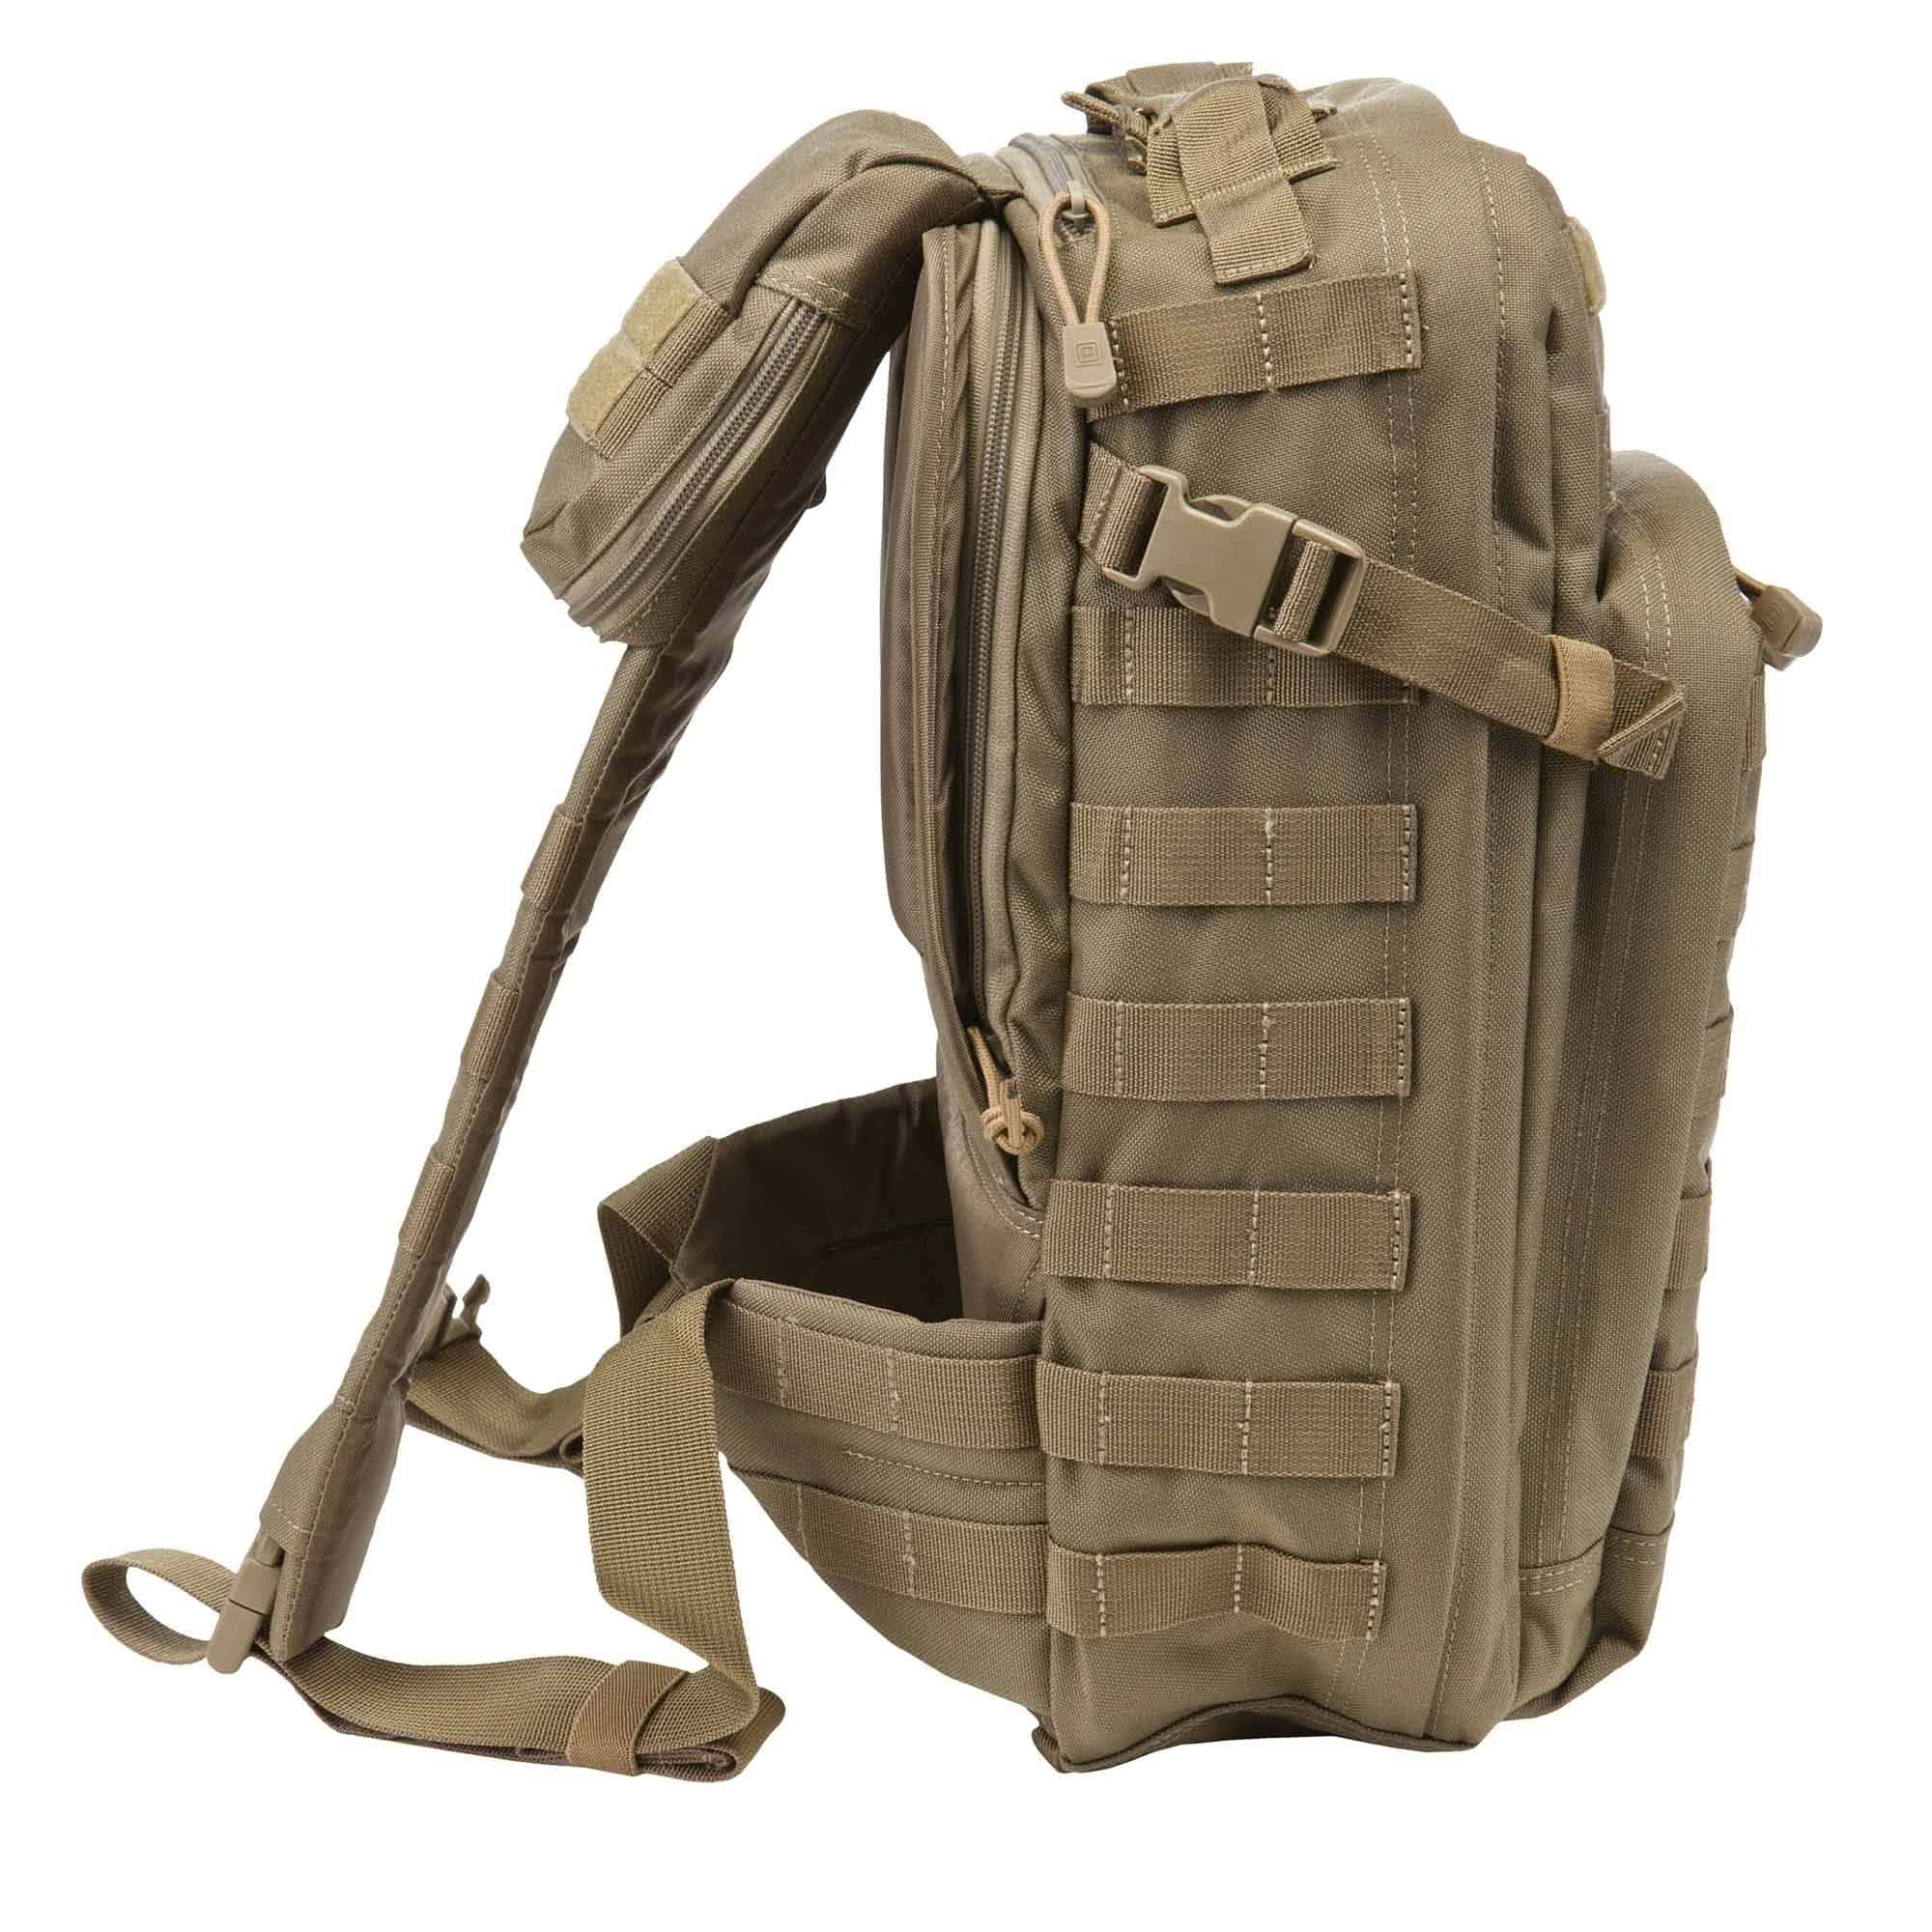 A 1 5 11 d 11. Рюкзак 5.11 Tactical Rush 10. Тактический рюкзак 5.11 Tactical. 5.11 Tactical Rush Moab 10. 5.11 Tactical однолямочный рюкзак.